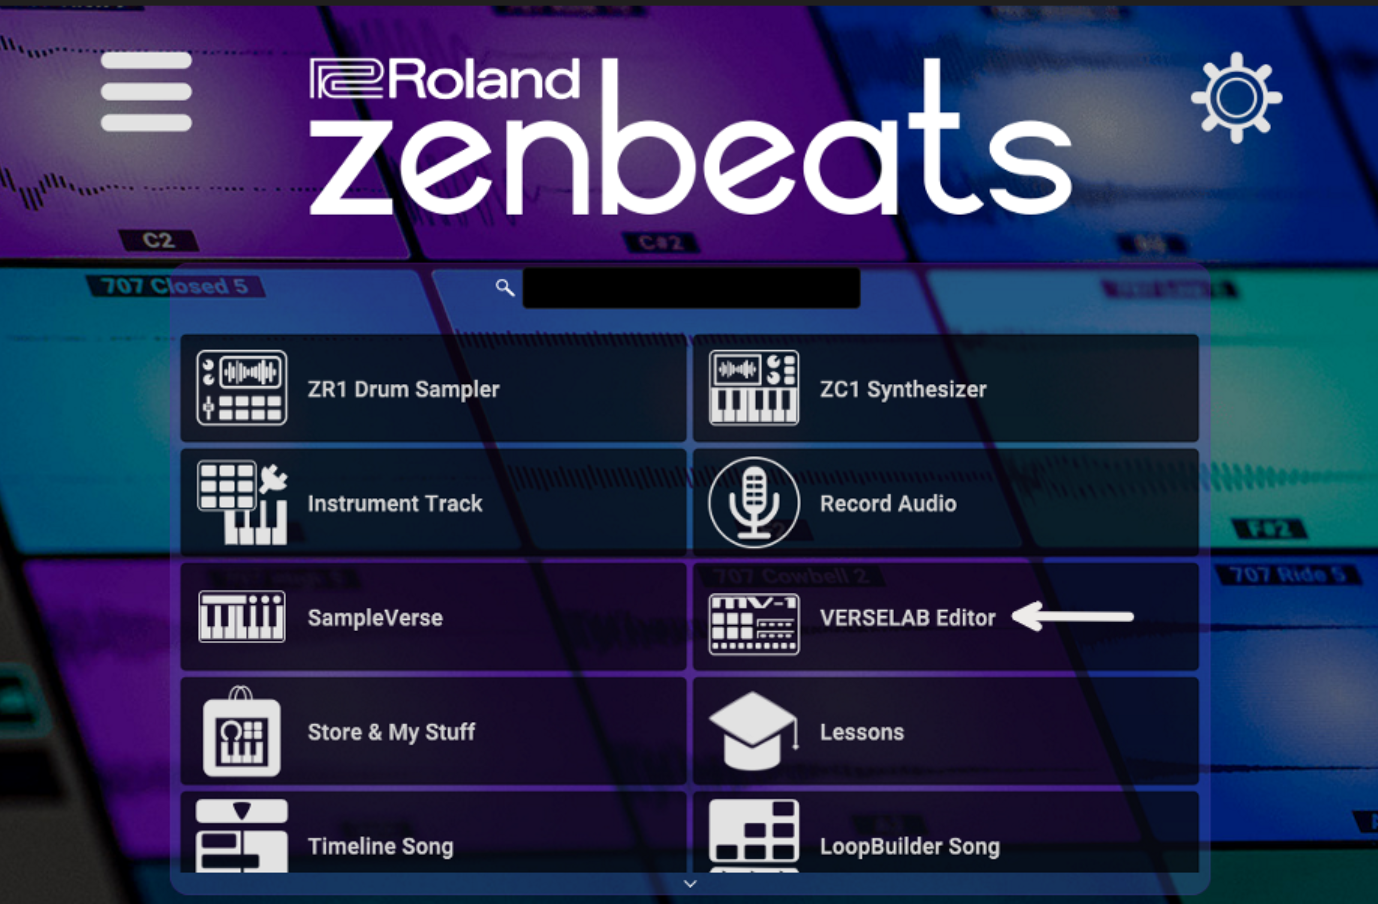 MV-1: Using the VERSELAB Editor in Zenbeats – Roland Corporation